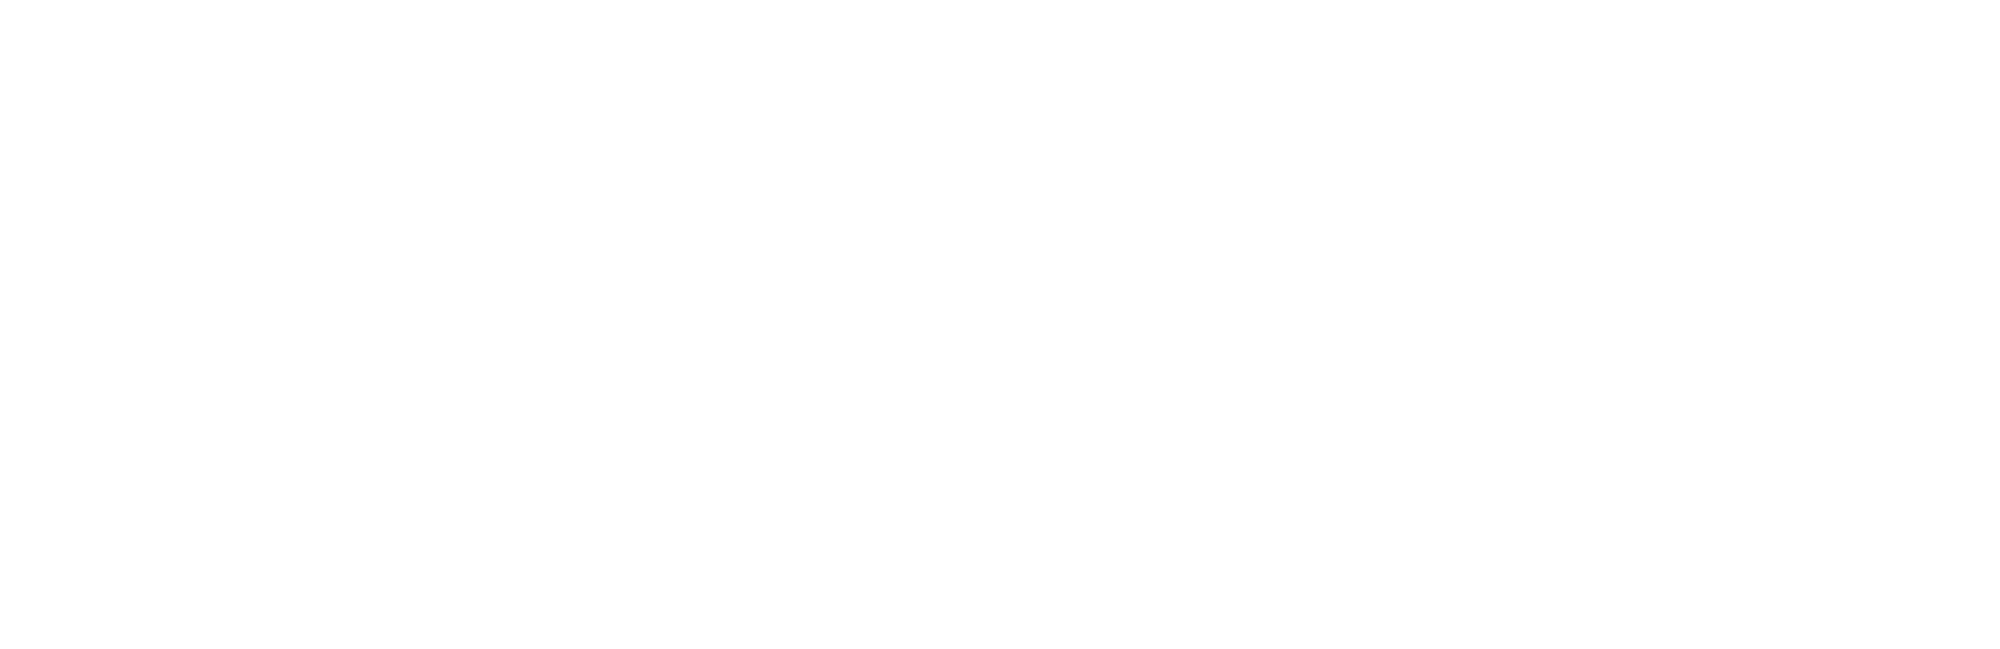 Moving Violations logo